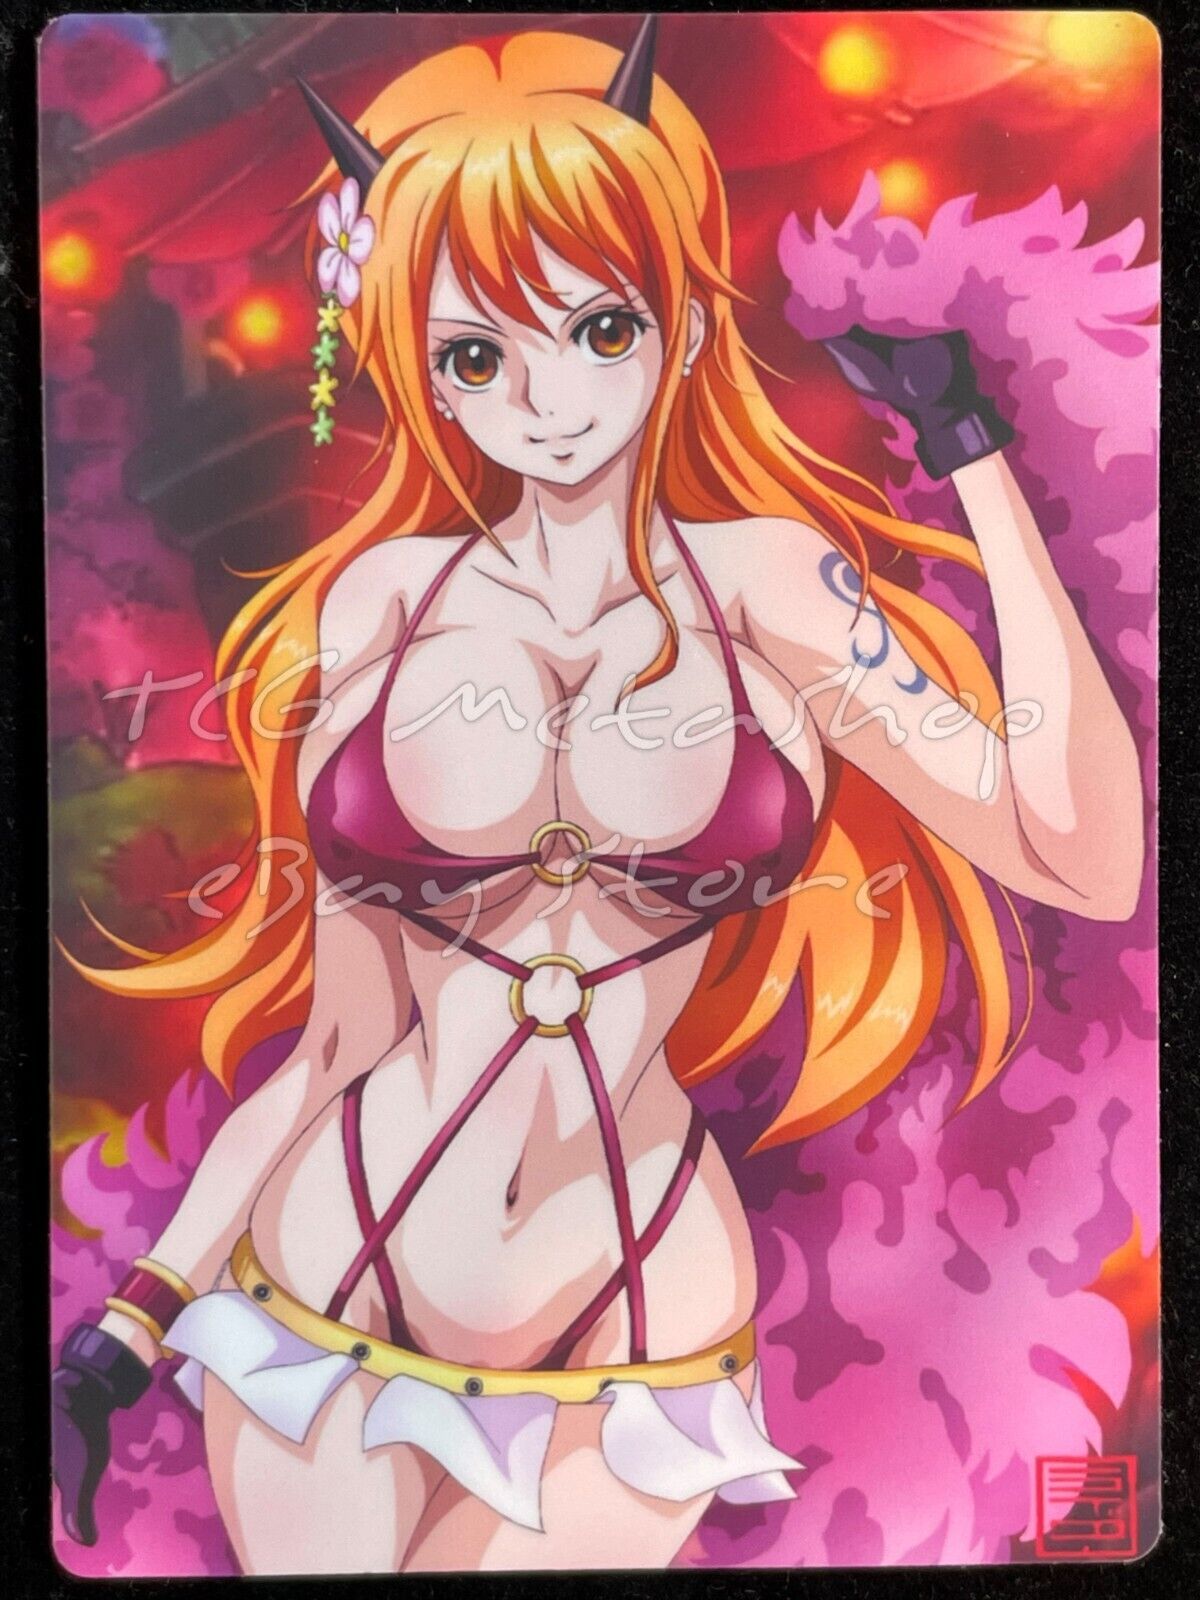 🔥 Nami One Piece Goddess Story Anime Card ACG # 921 🔥